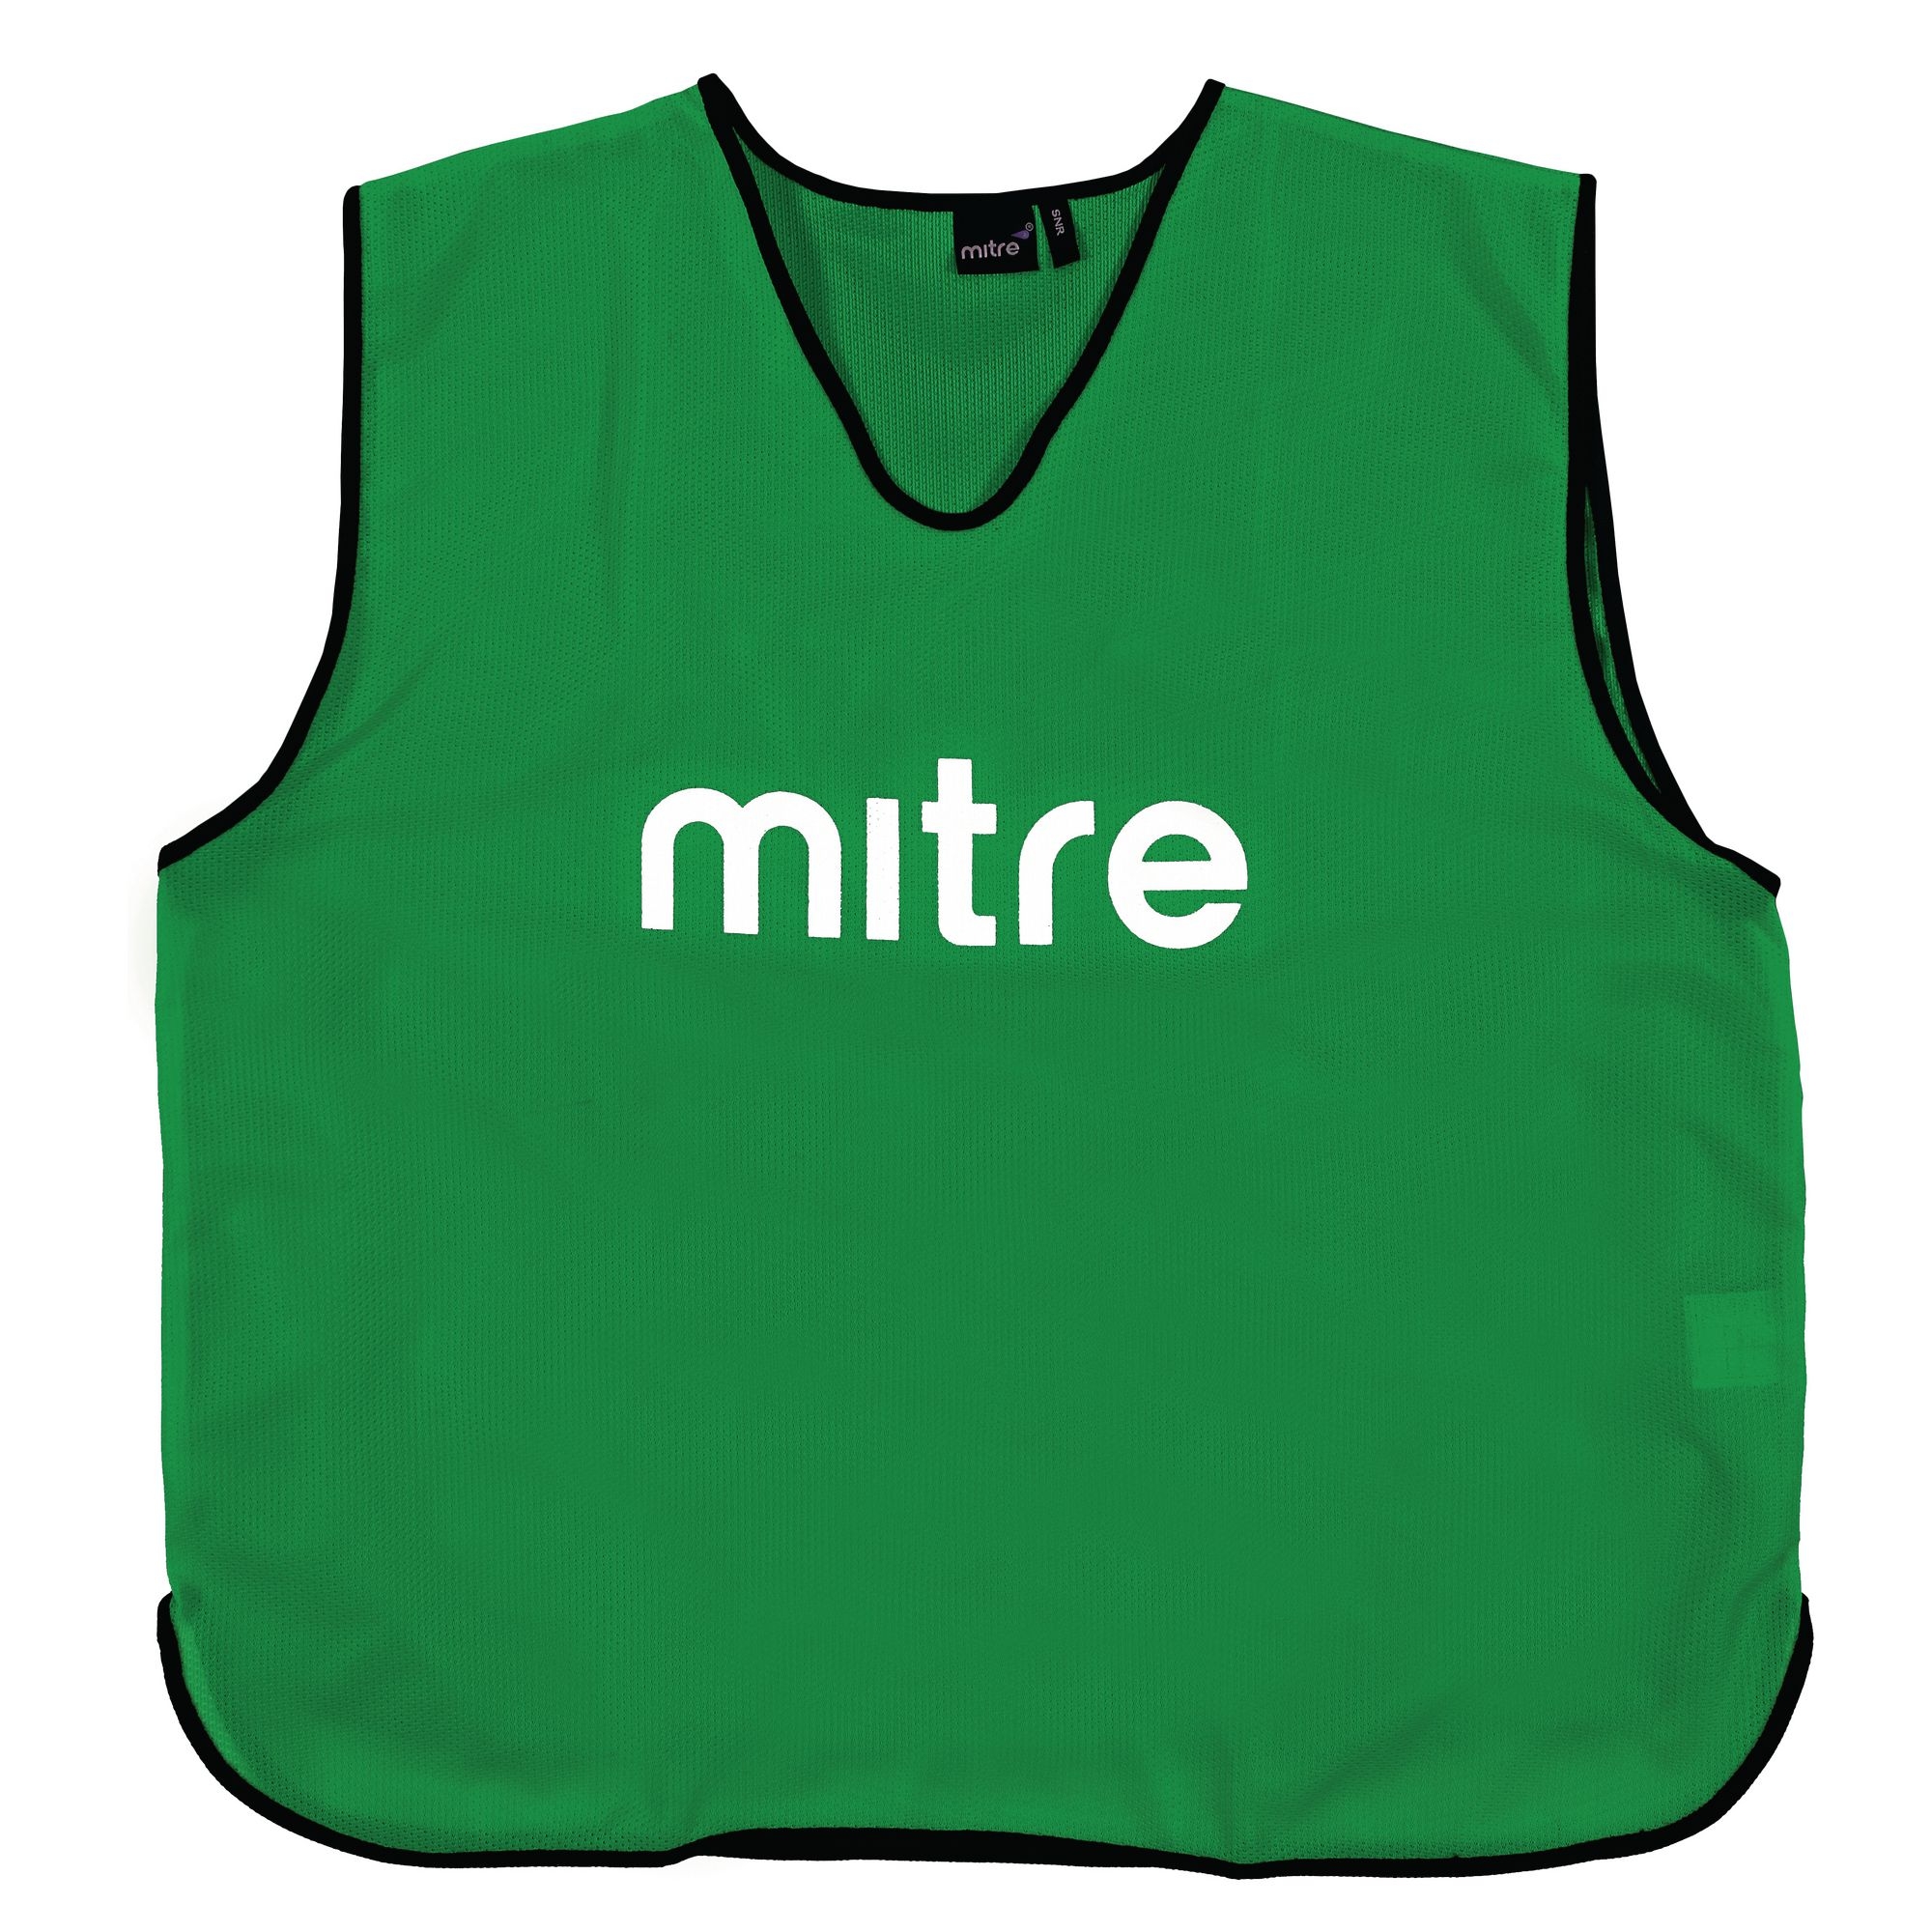 Mitre Training Bib - Adult Small-Medium - Green/Black